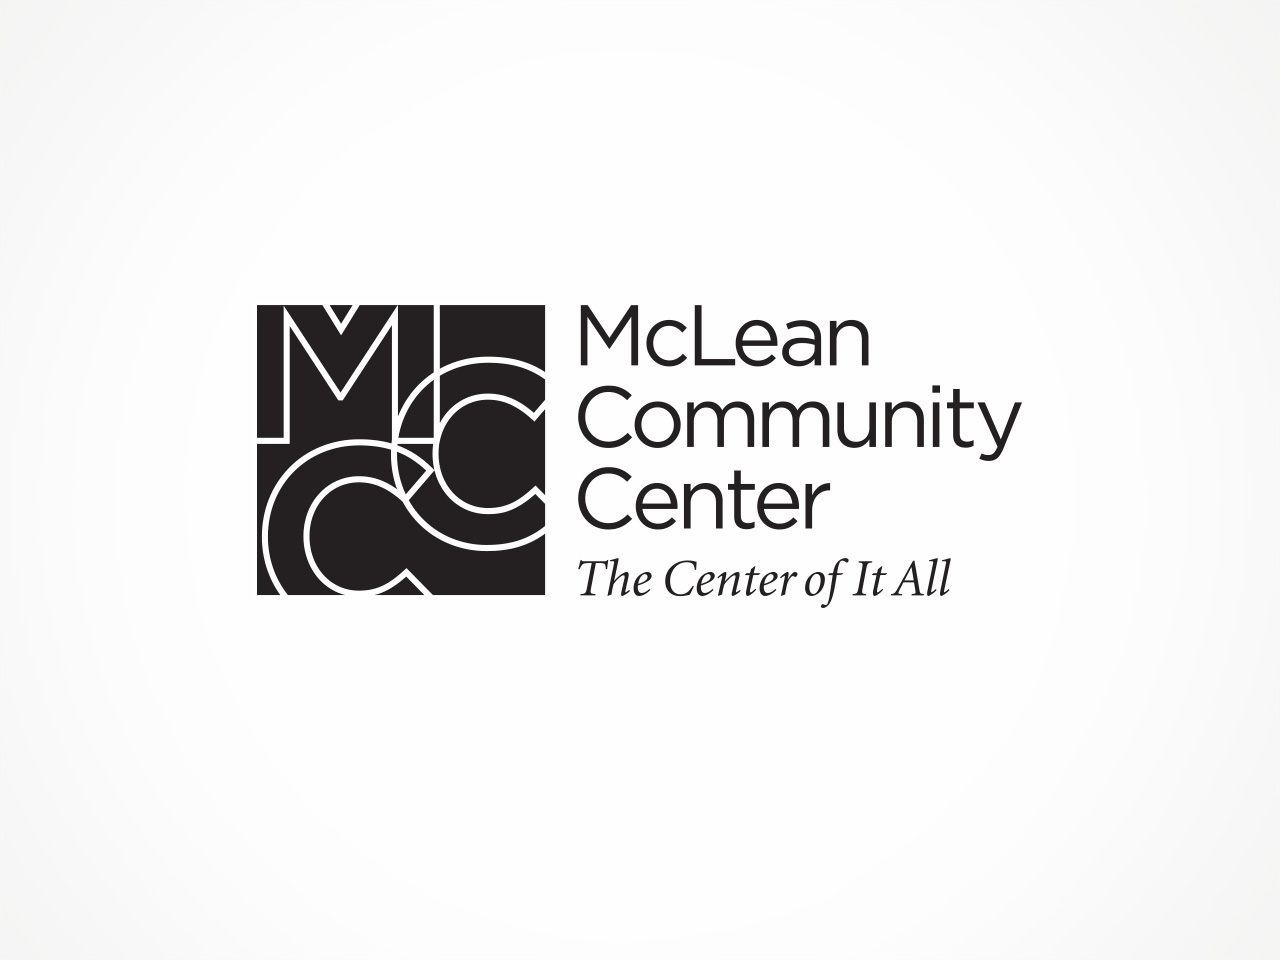 McLean Community Center